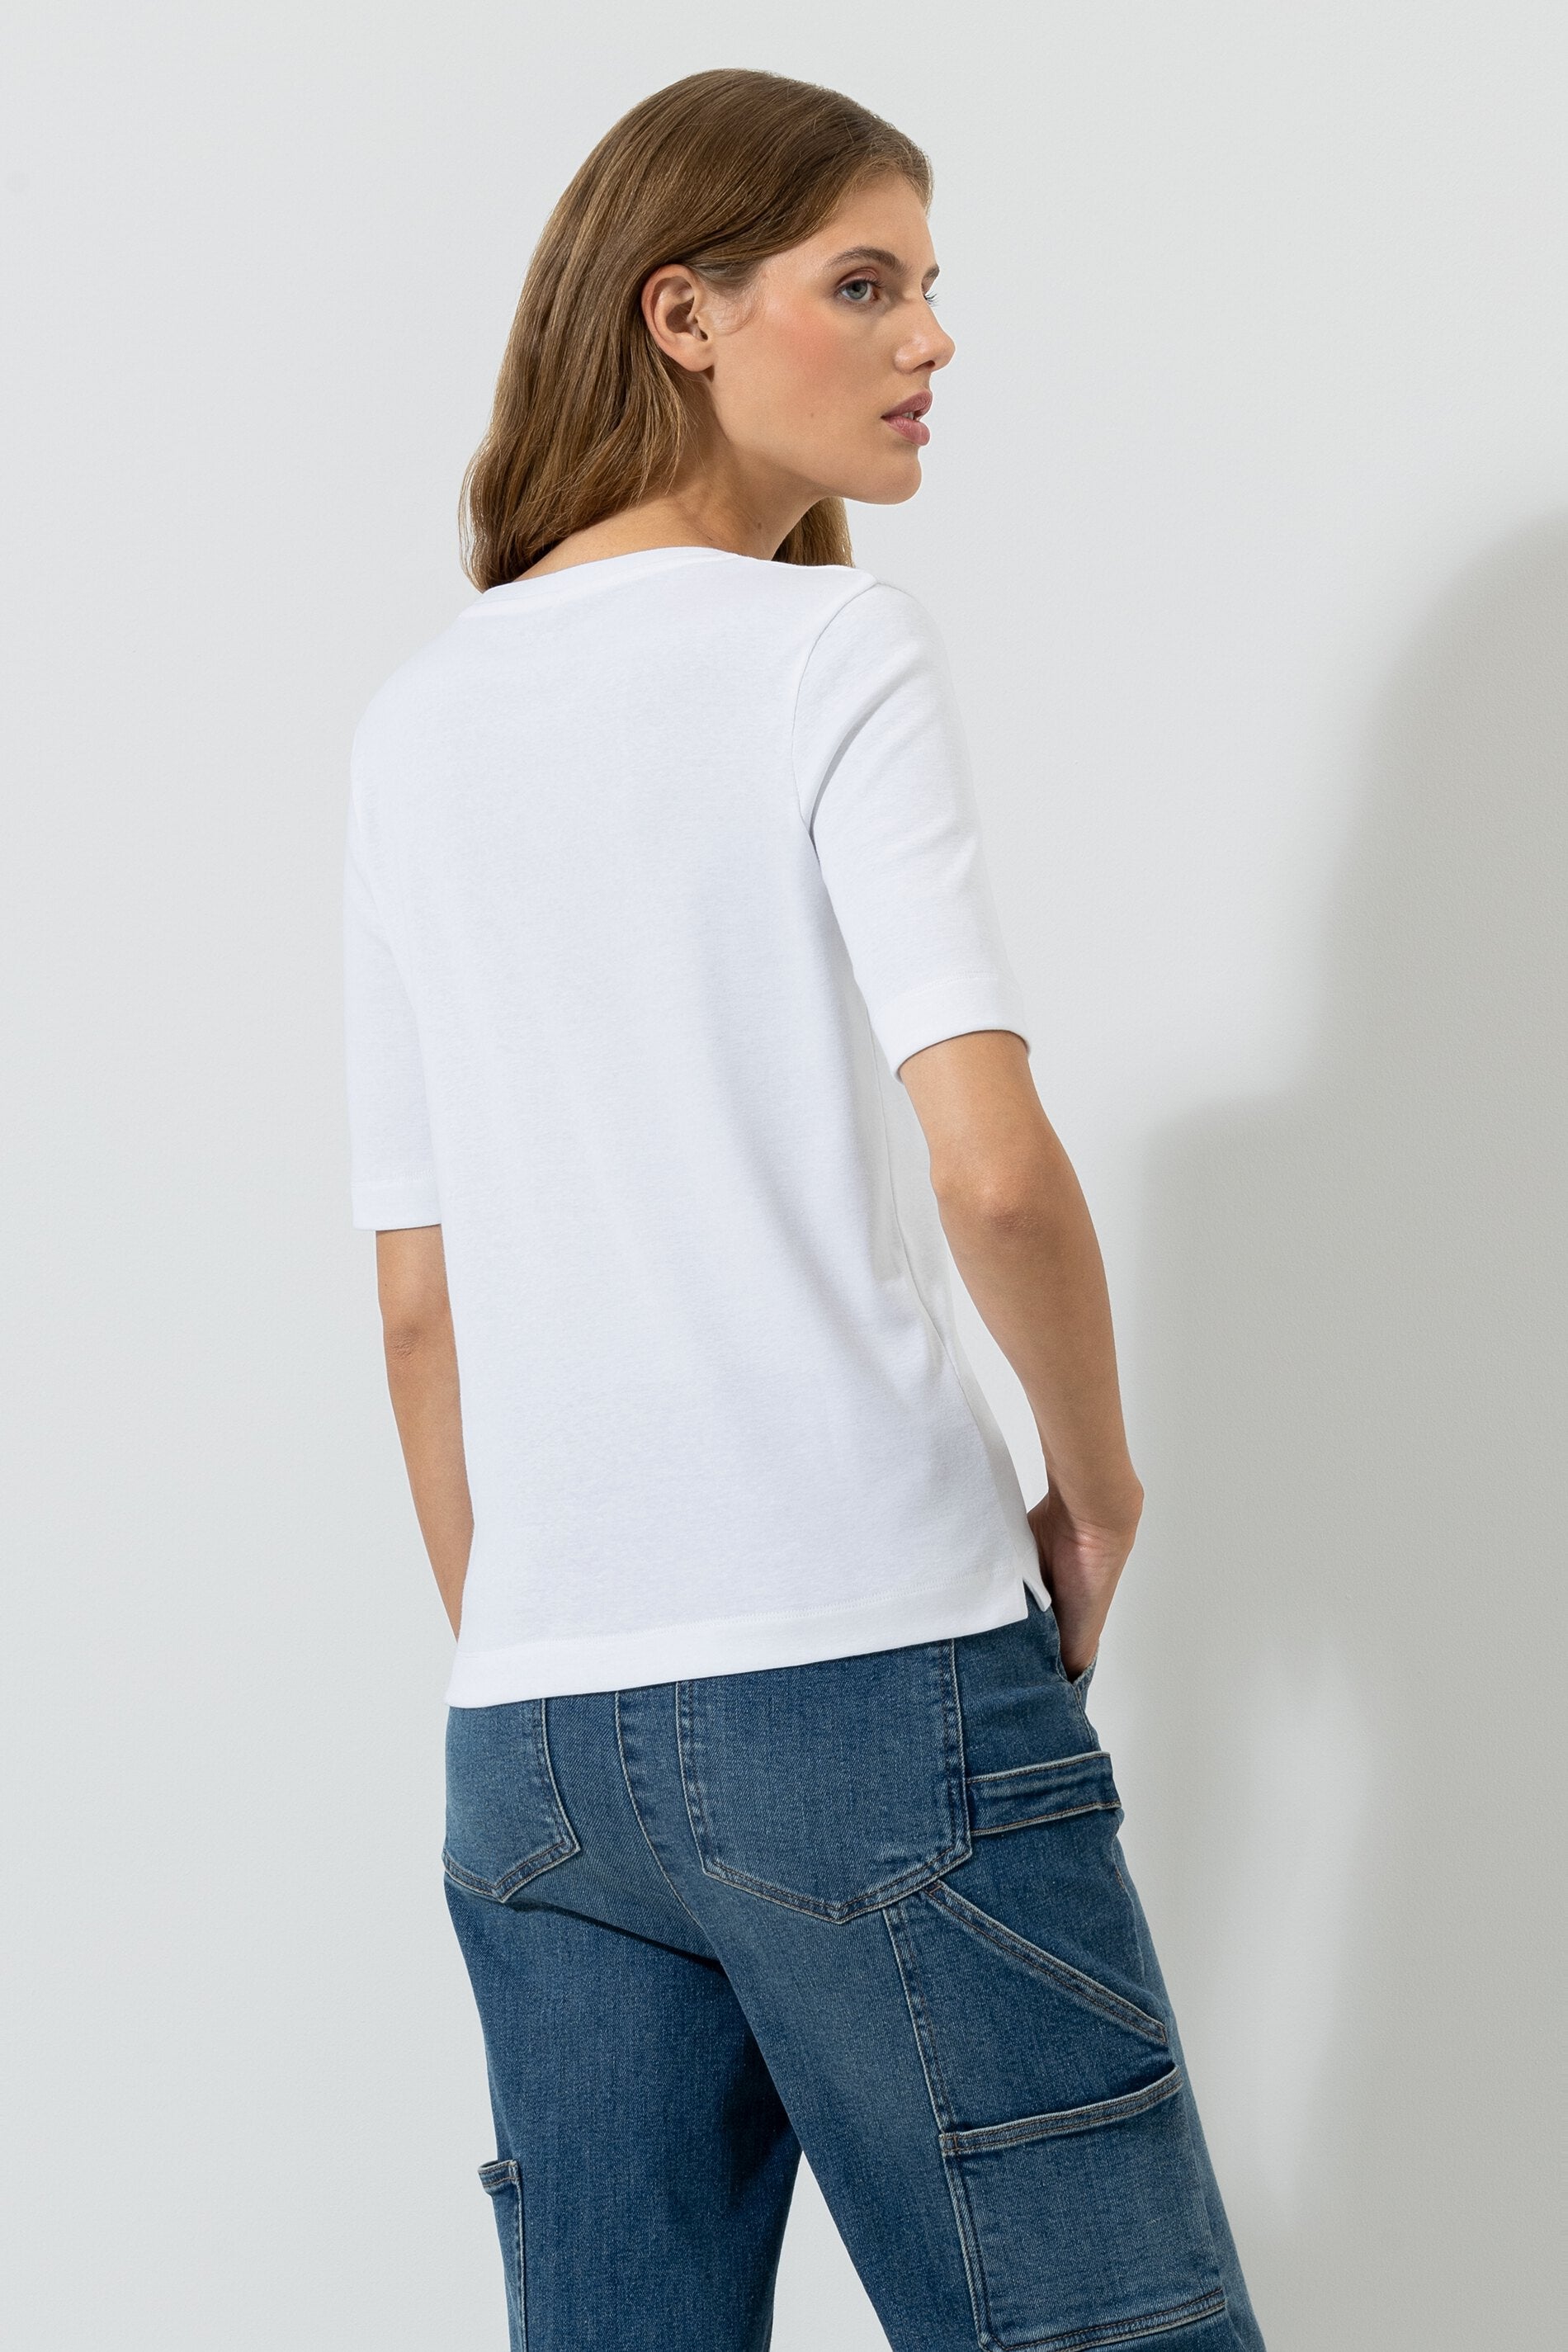 T-Shirt-aus-Organic-Cotton-LUISA-CERANO-OUTLET-SALE-4.jpg